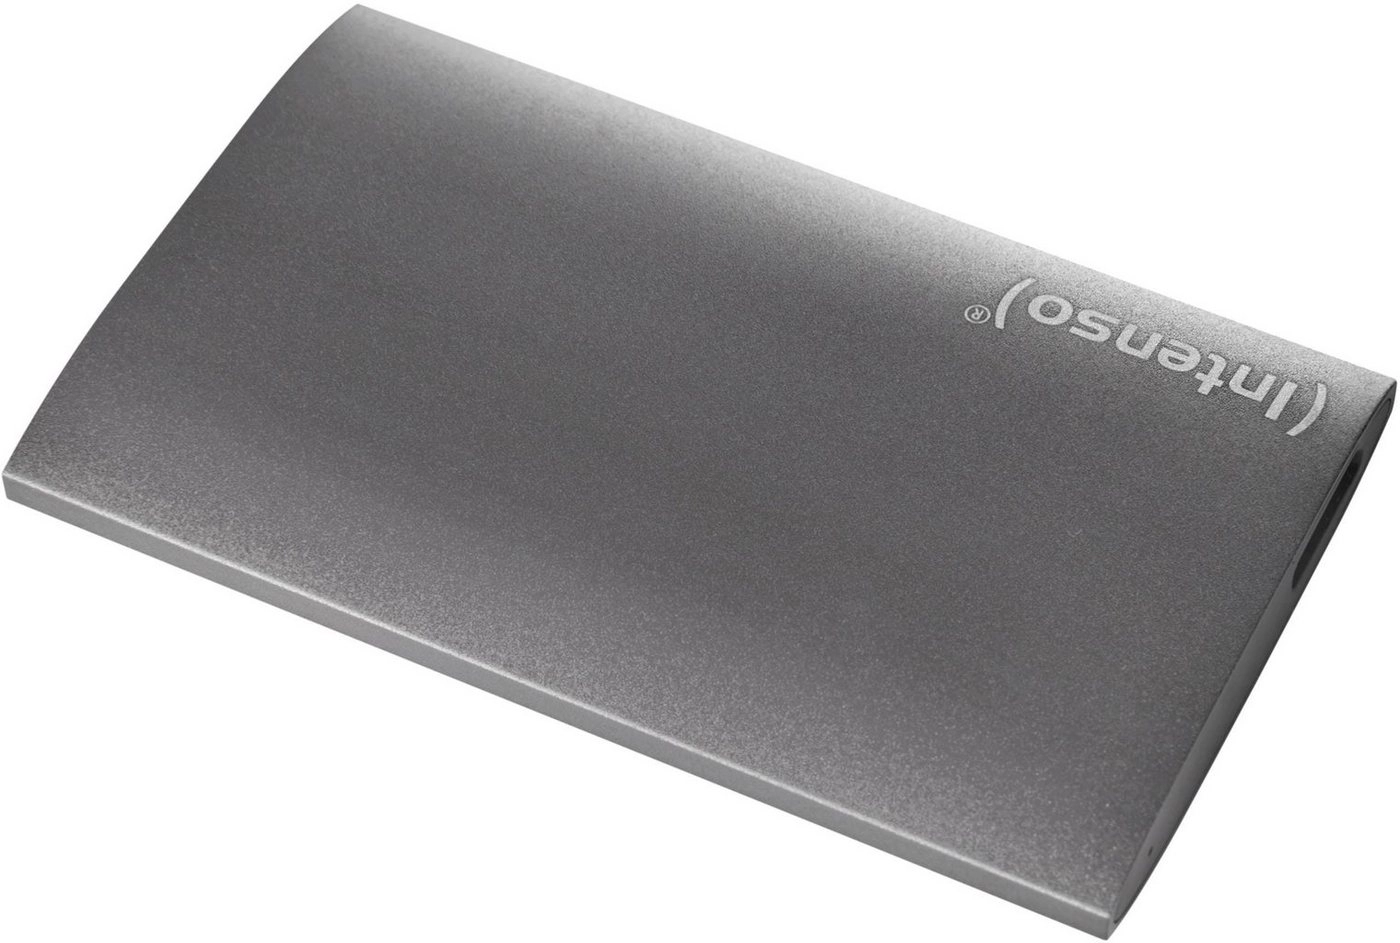 Portable SSD Premium 128 GB, Externe SSD